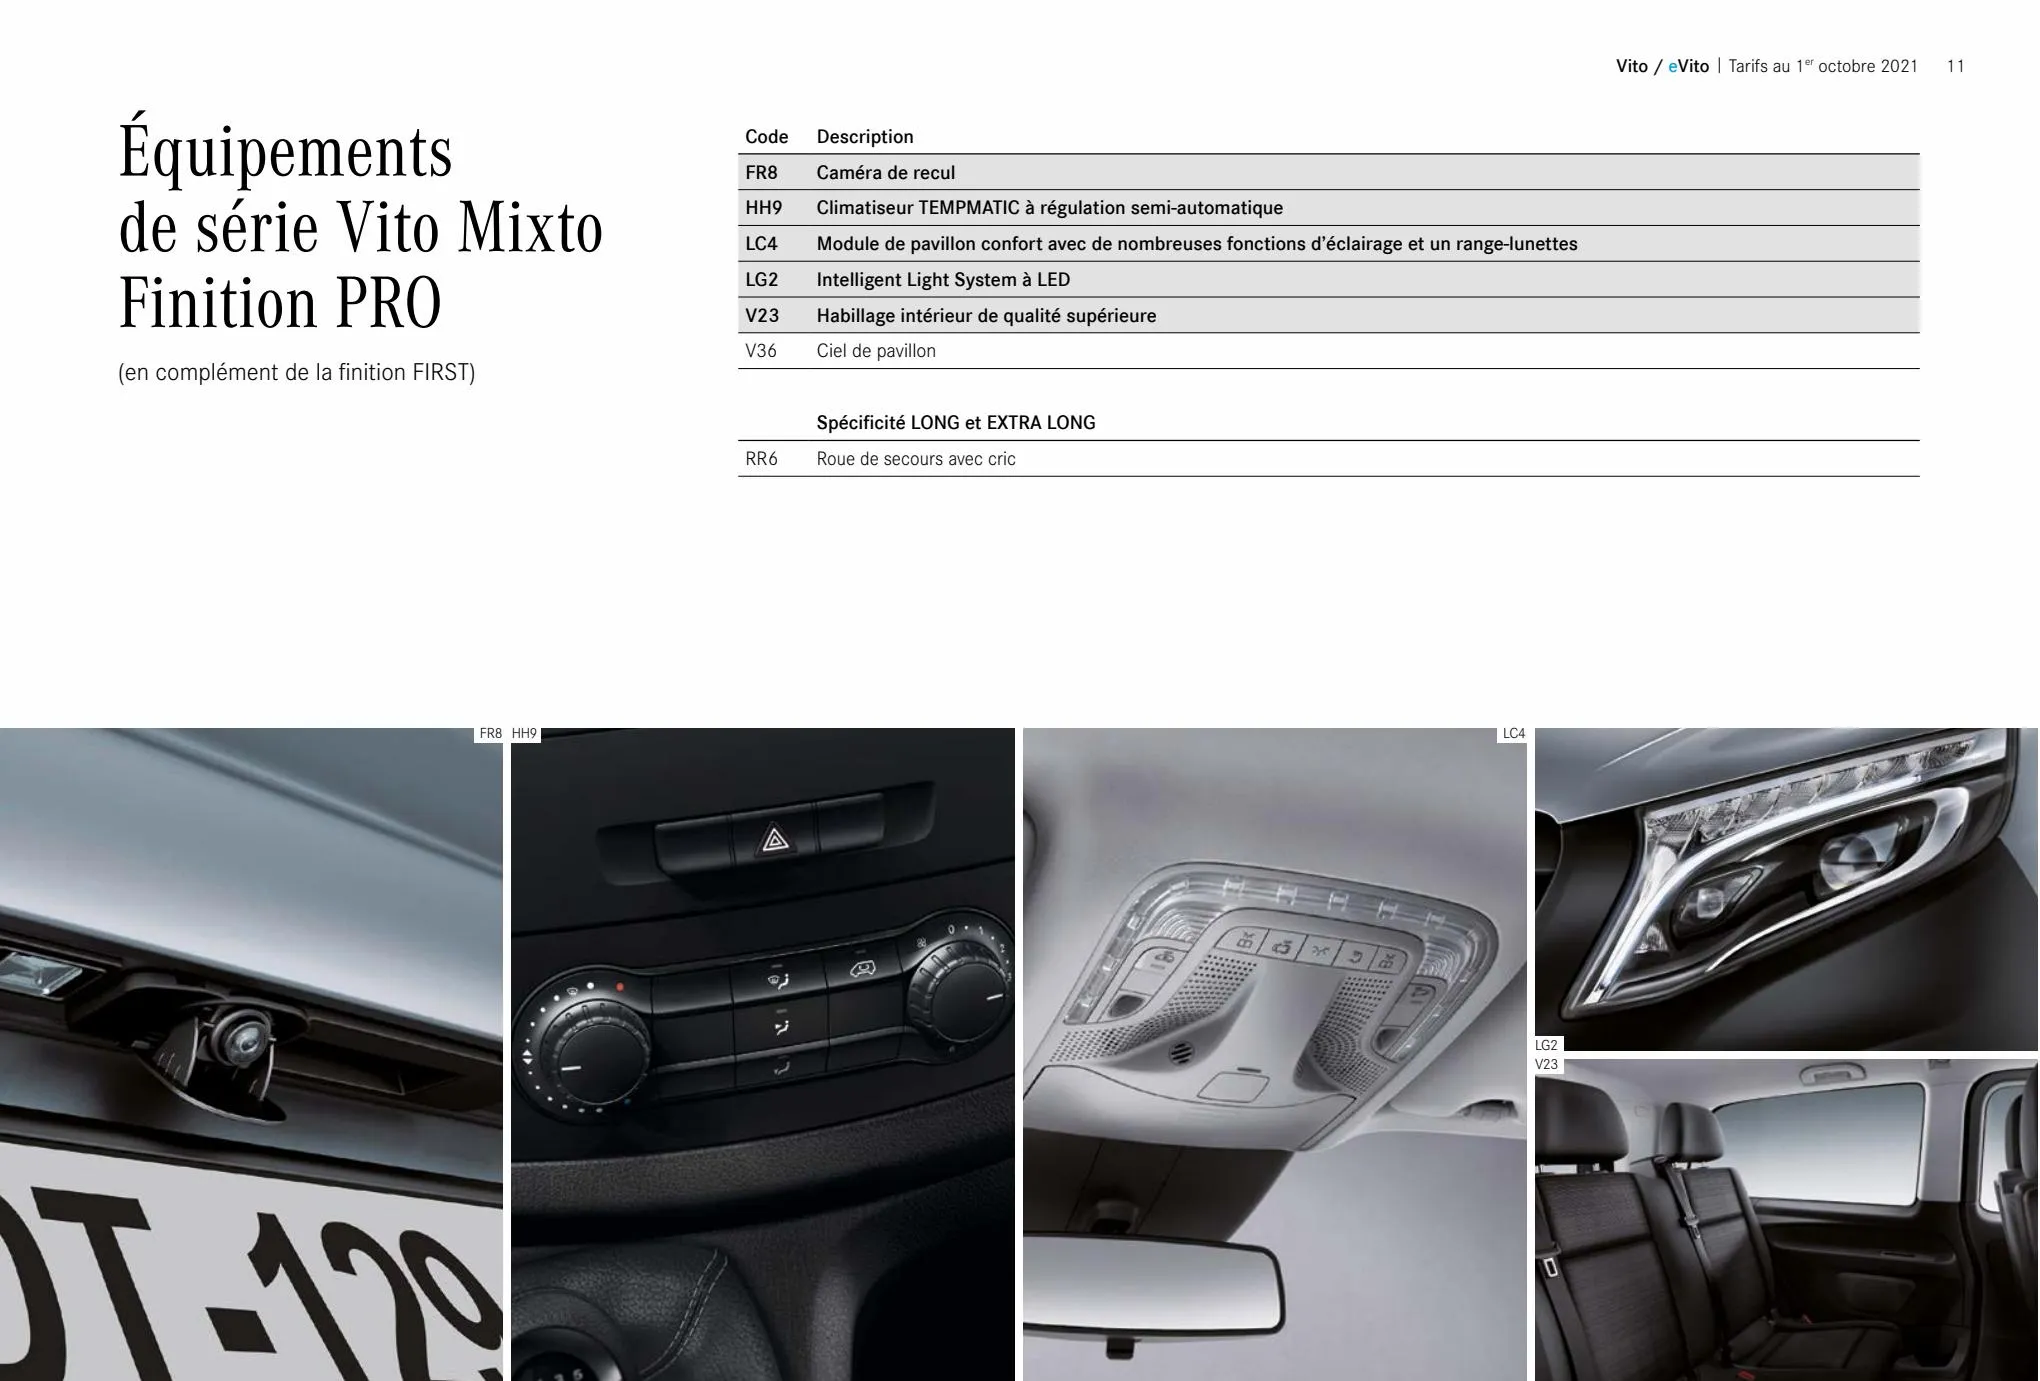 Catalogue Tarifs et brochures Vito/eVito, page 00011